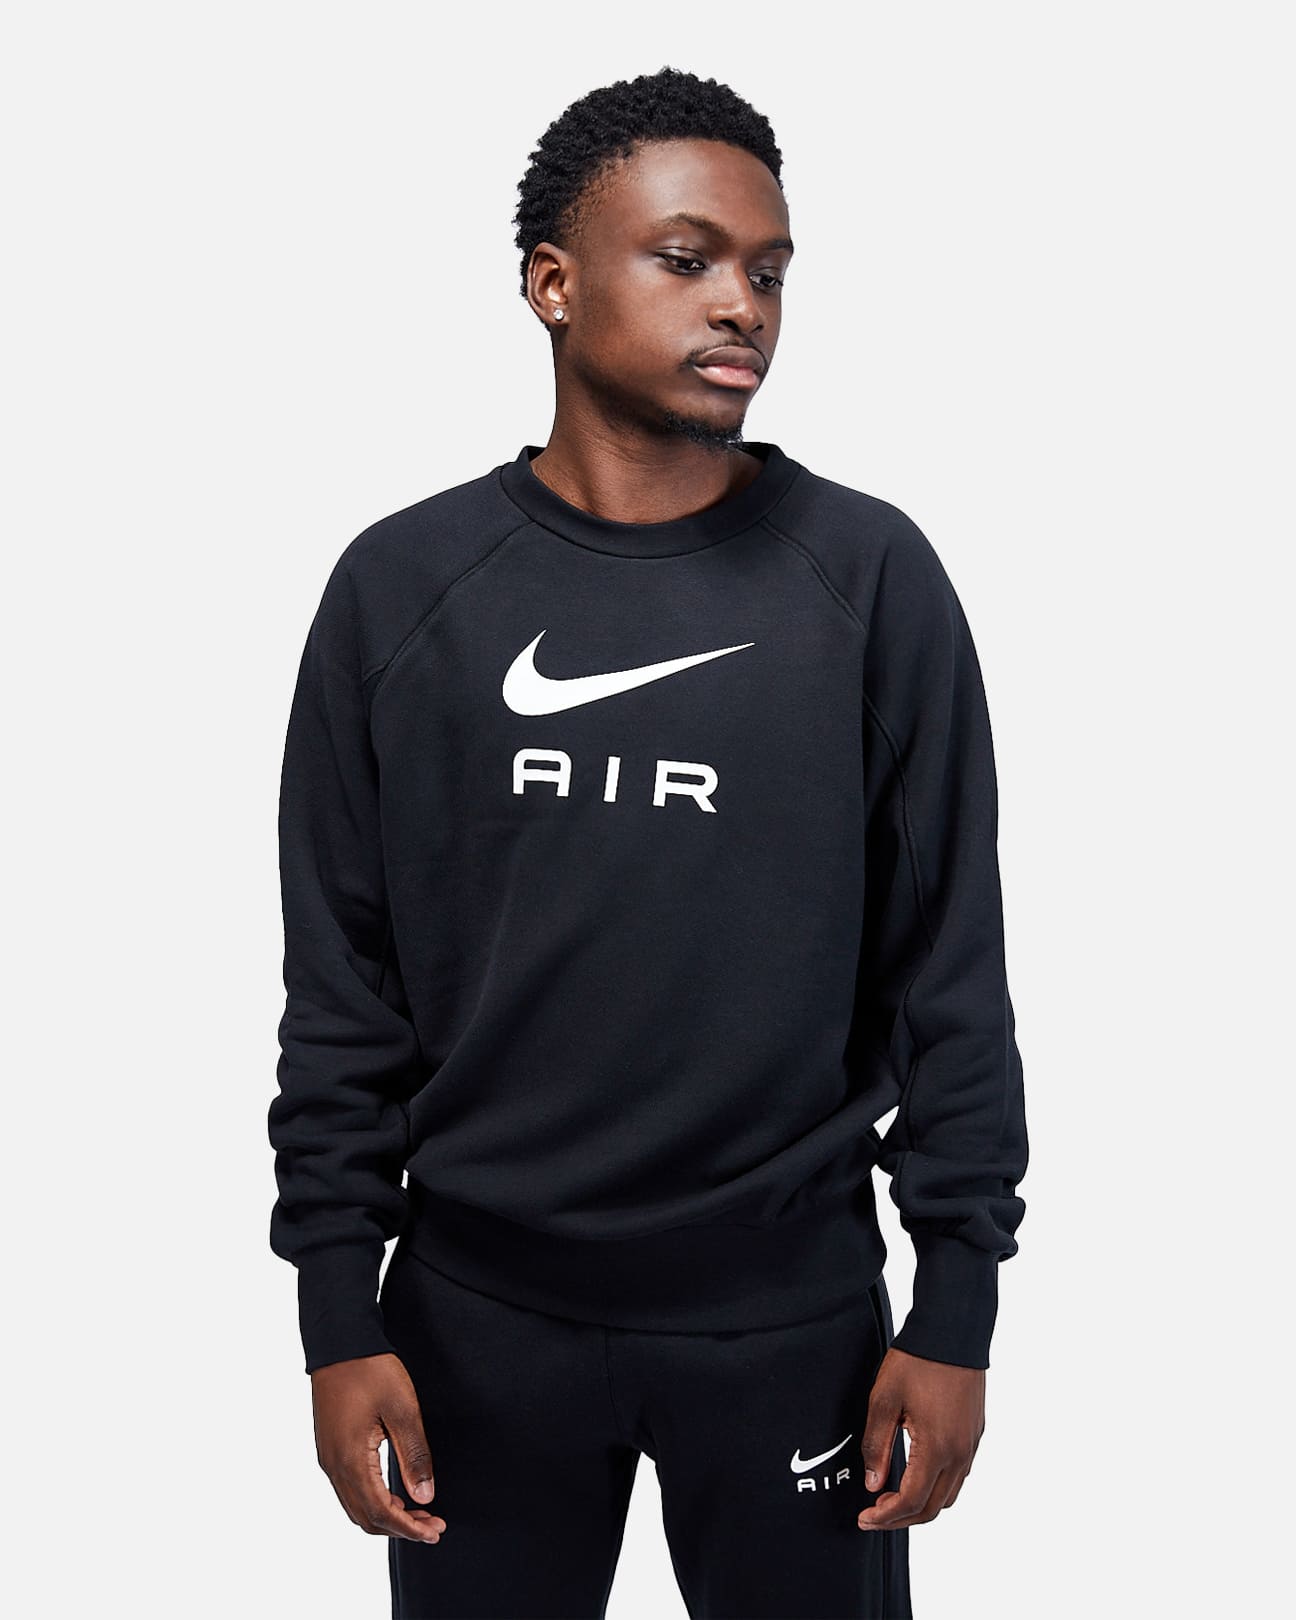 Nike Air Sweatshirt - Black/White